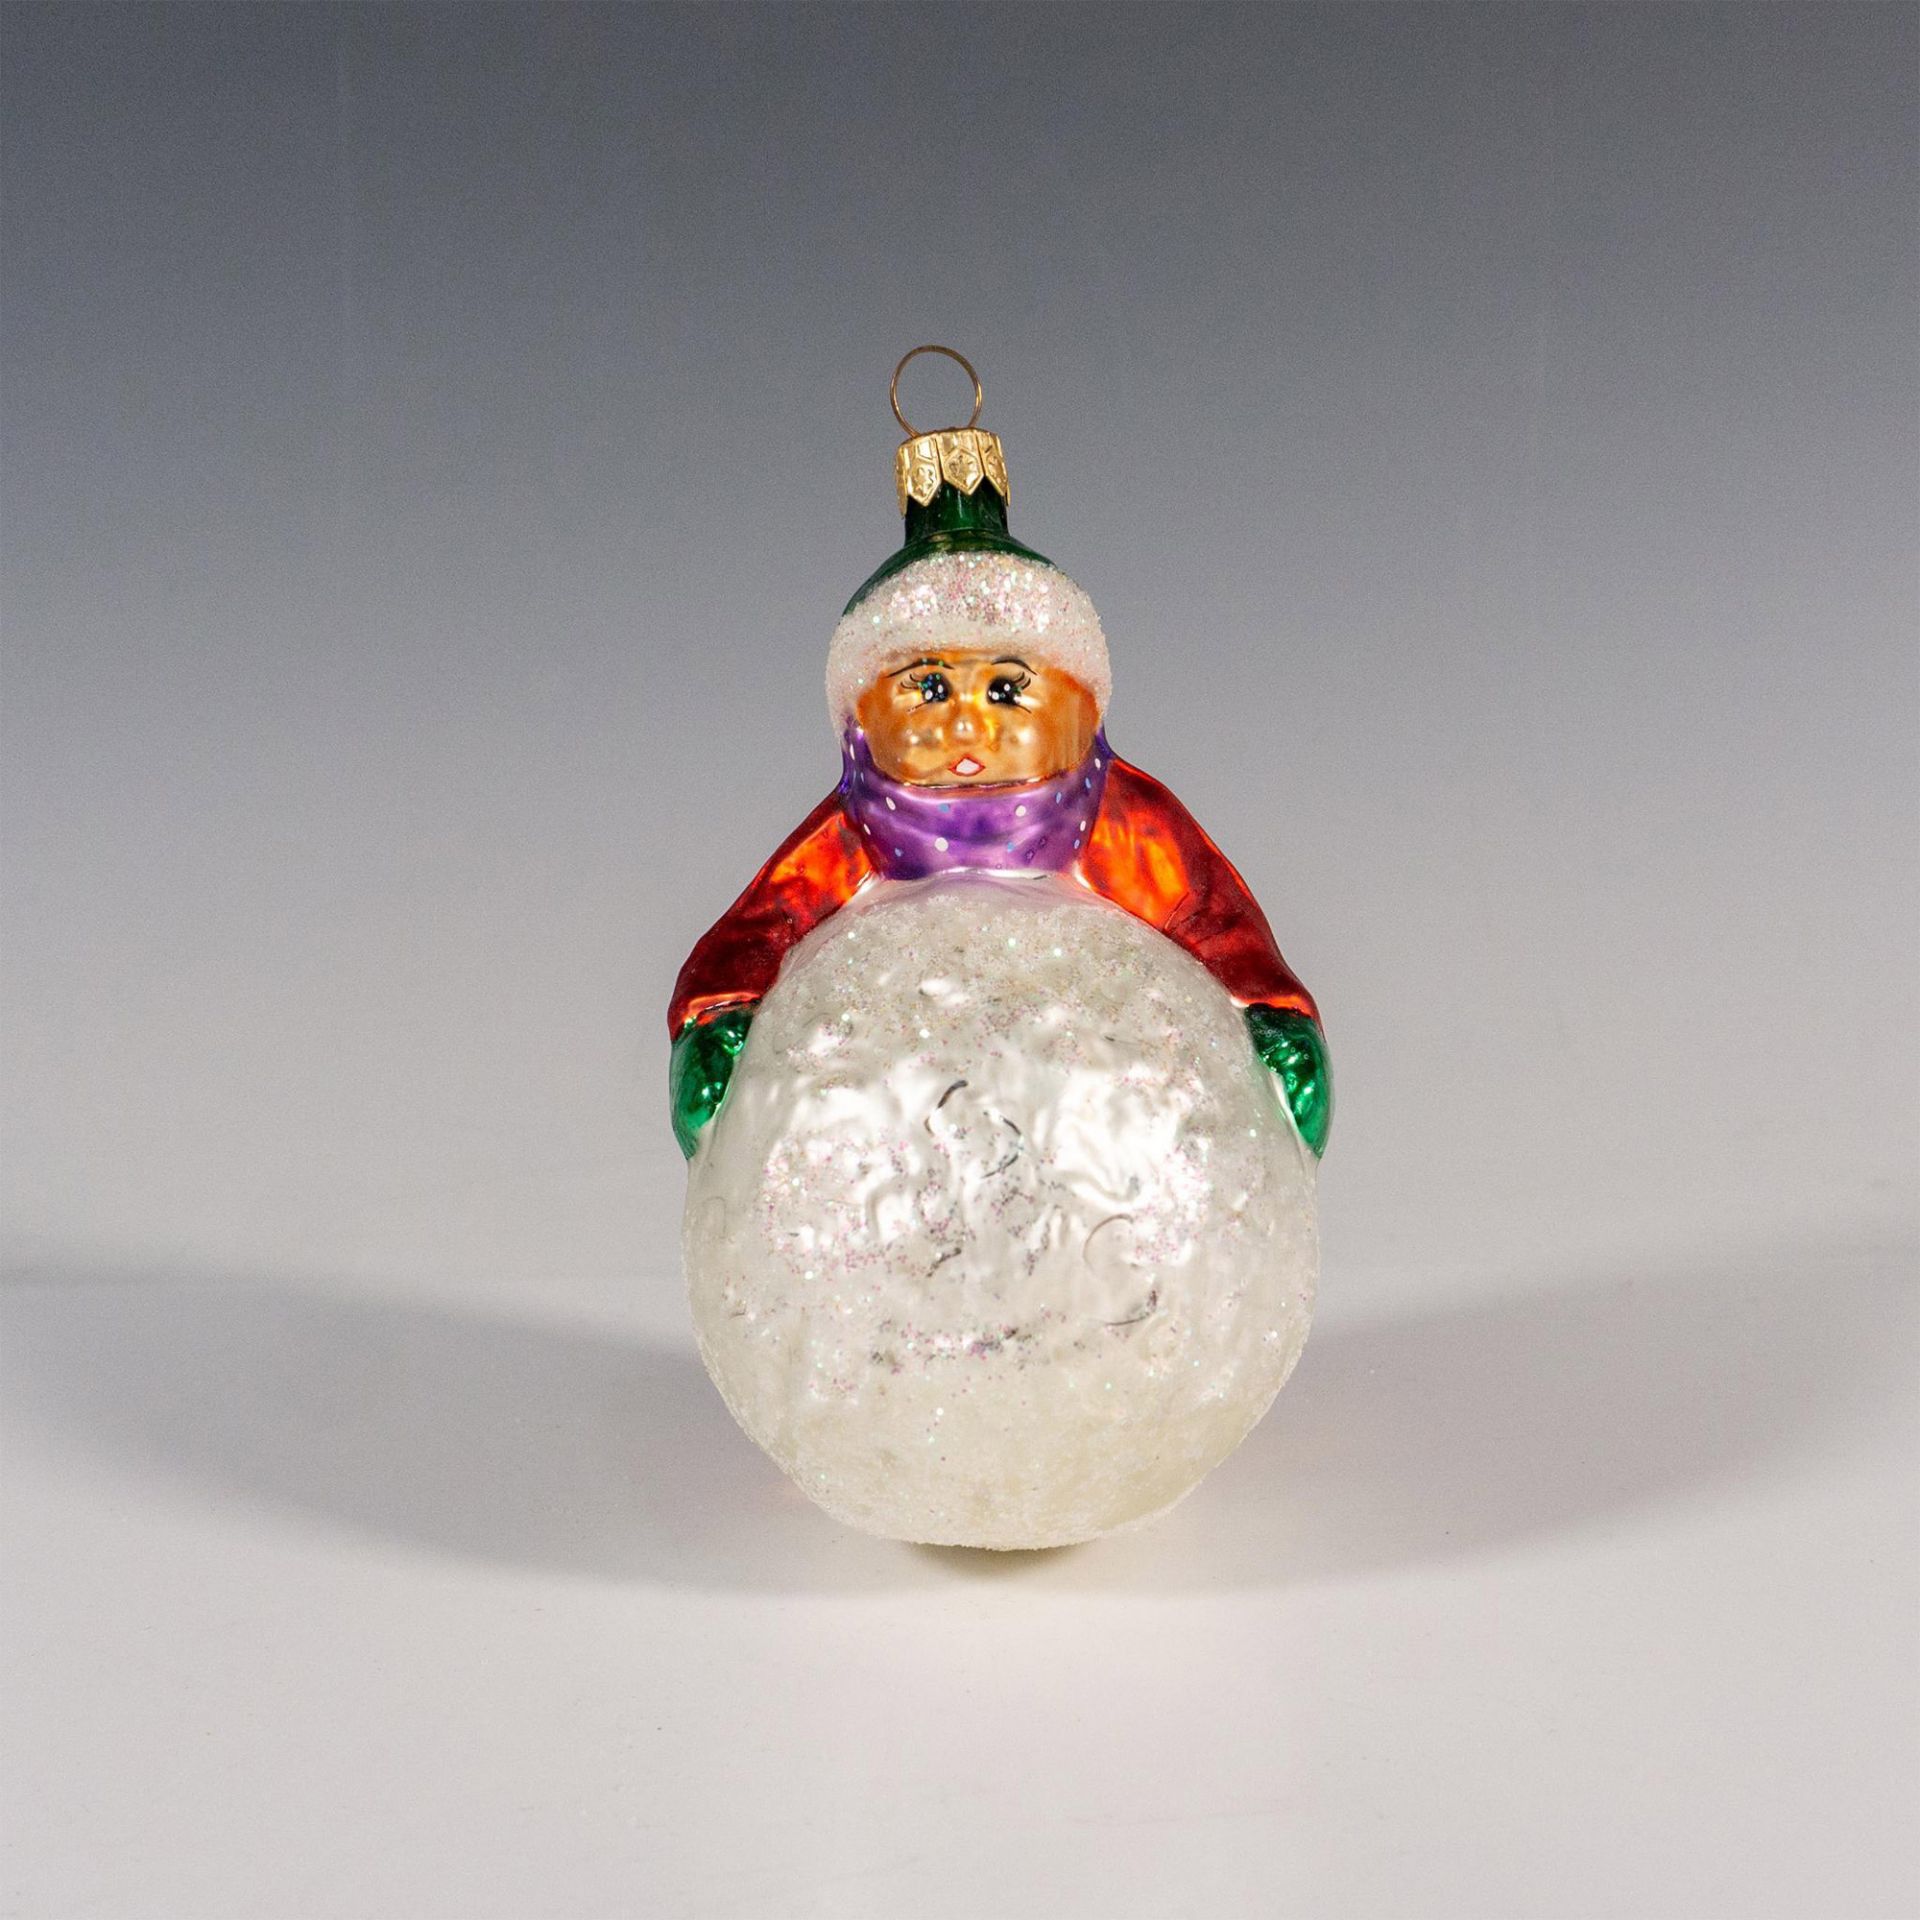 Christopher Radko Ornament, Snowballing, Boy with Snowball